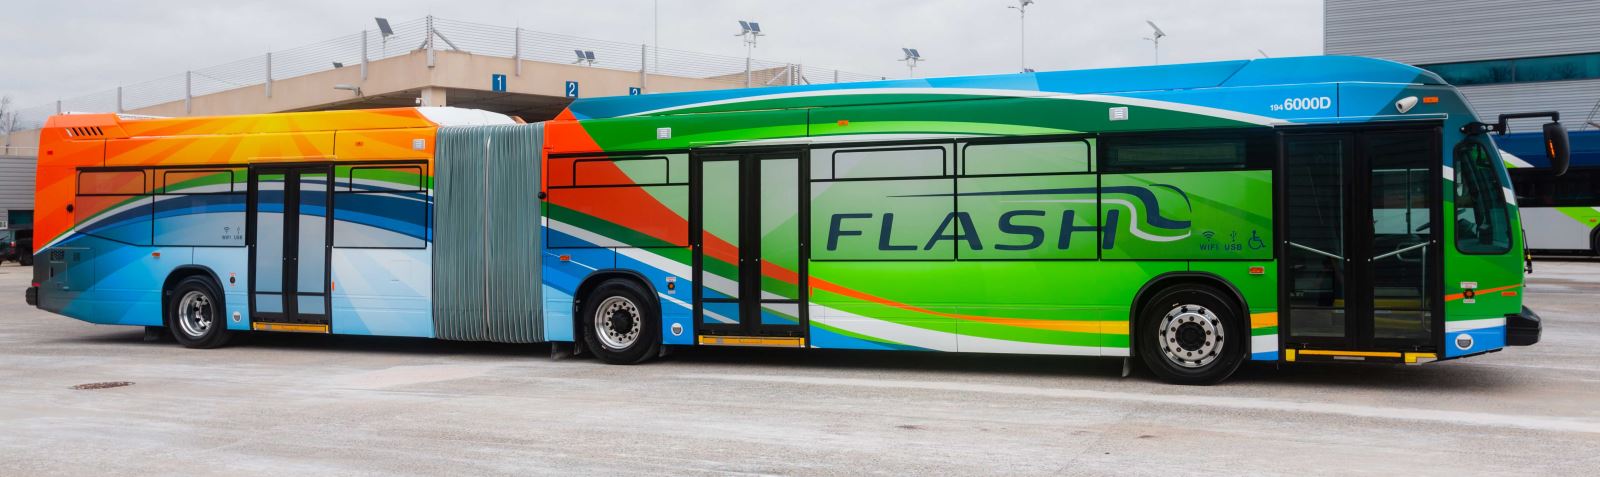 Flash bus 